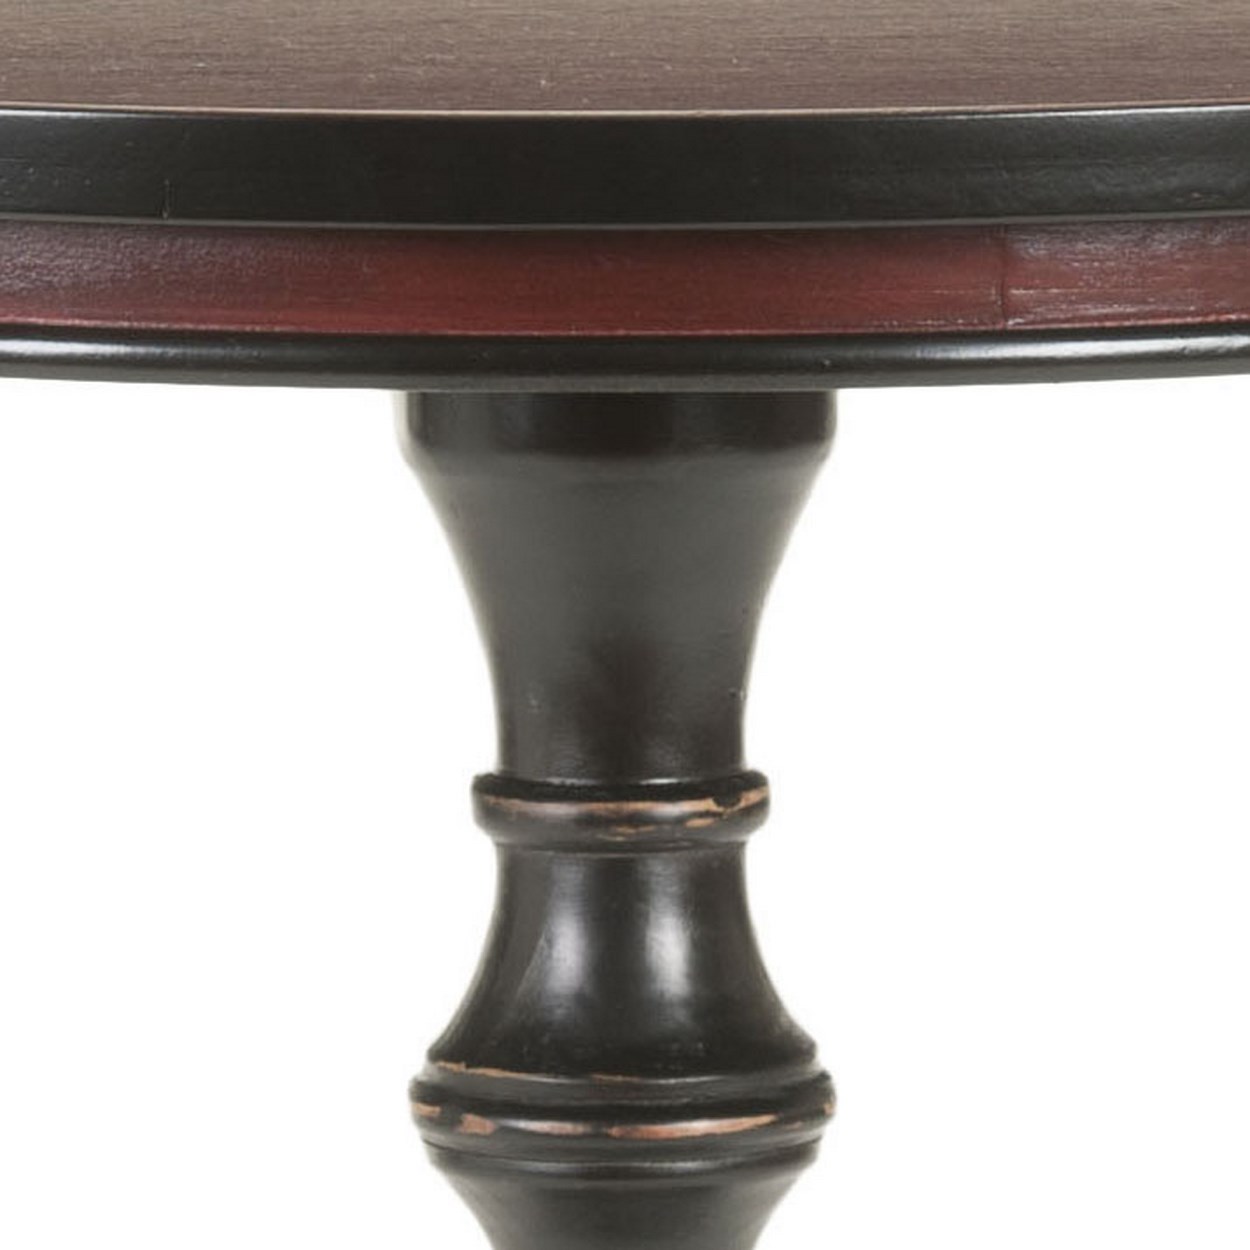 Safavieh Blake Side Table, Brown - image 3 of 4